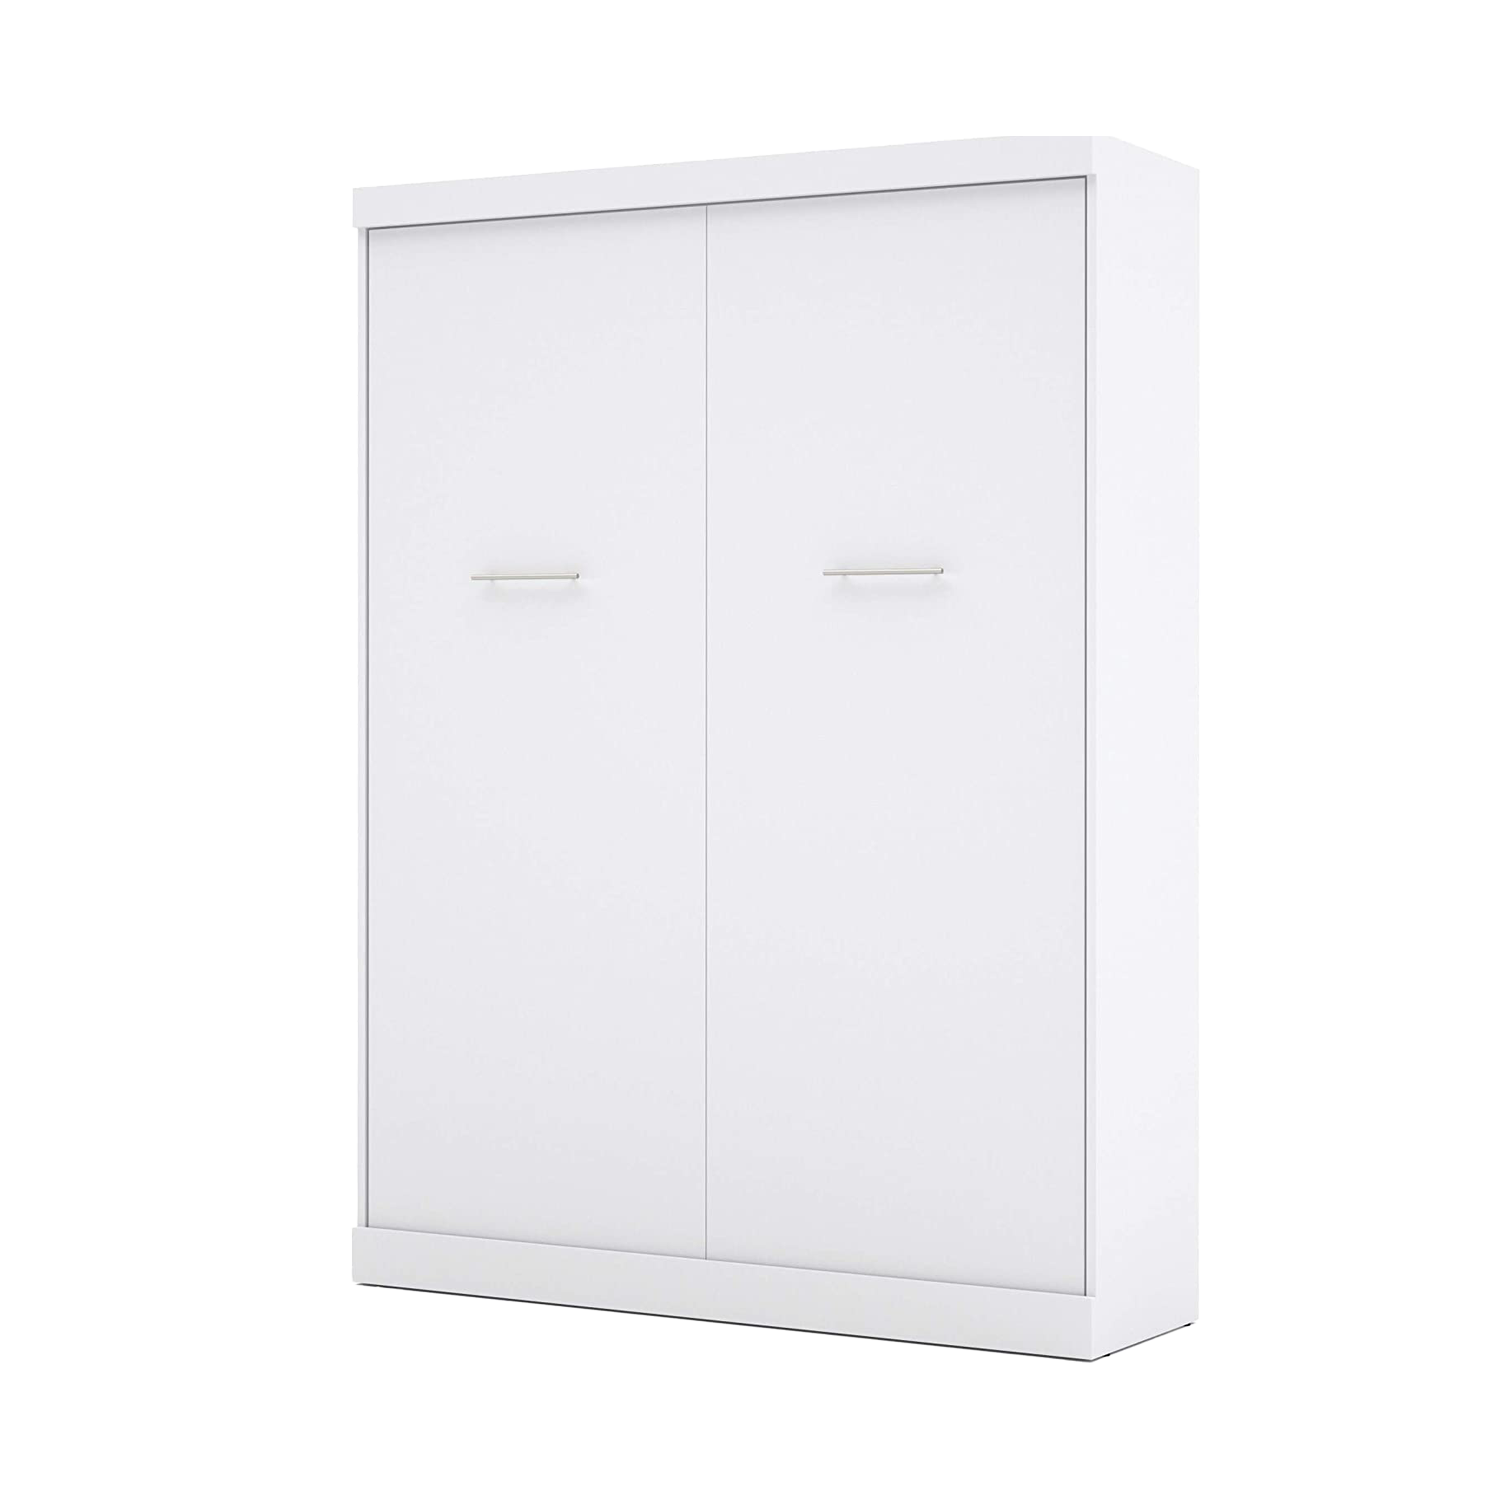 Bestar Nebula Queen Murphy Bed white cabinets